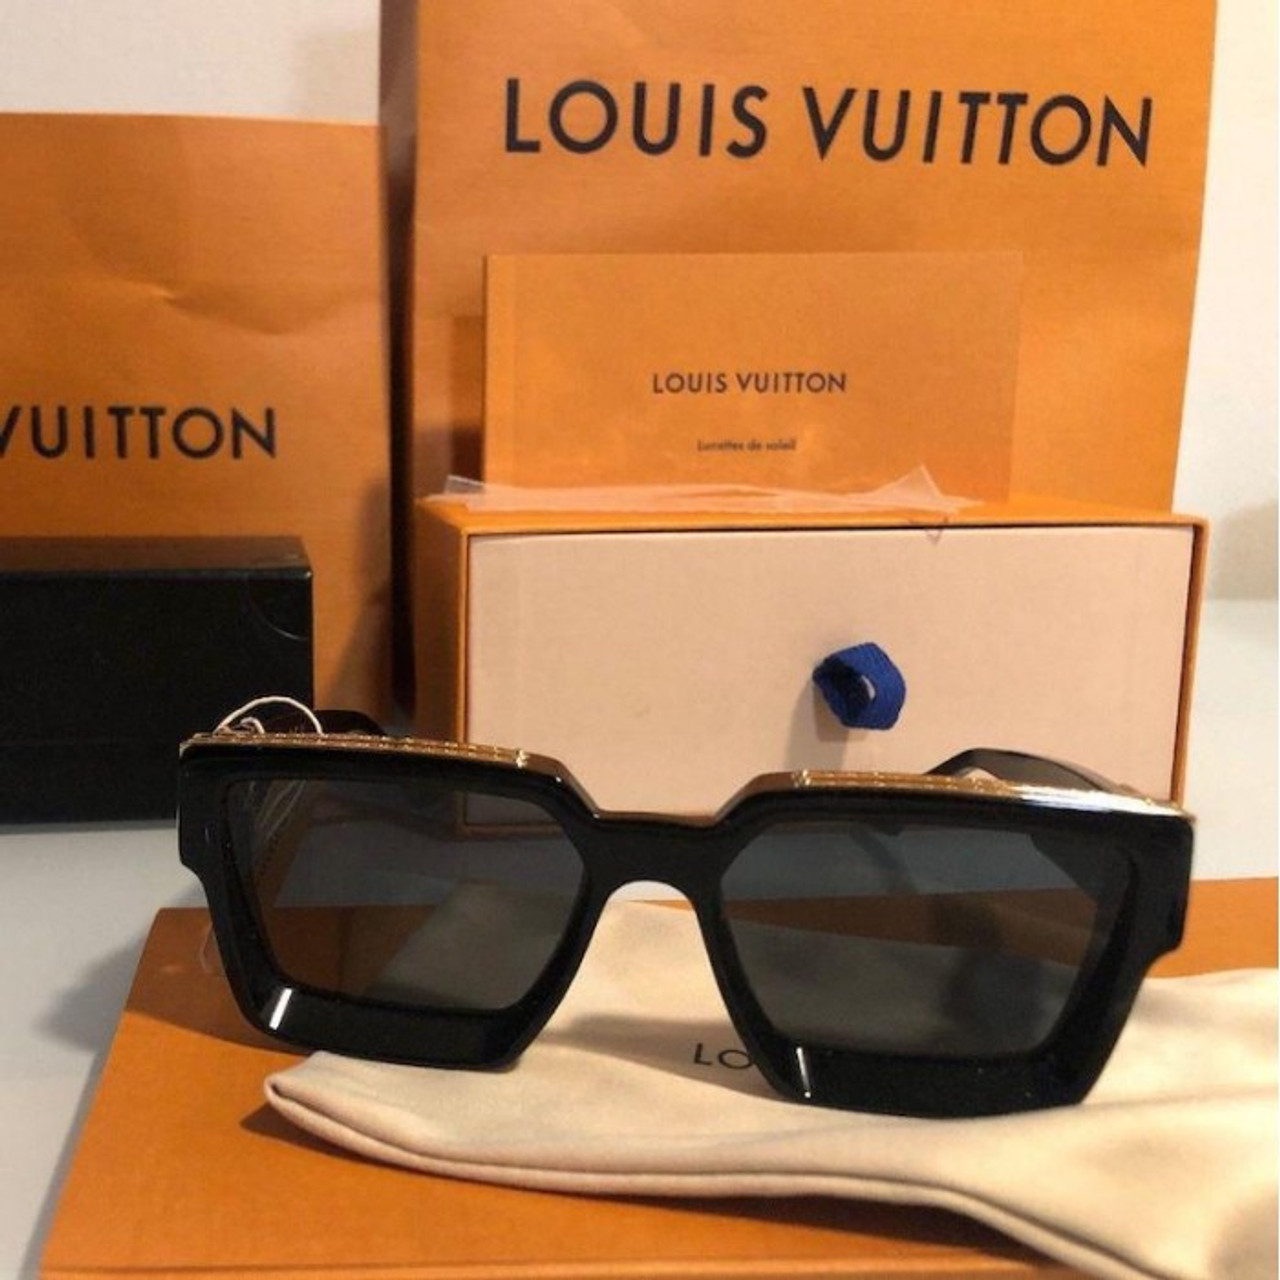 greenscreen  LV sunglasses dupe. # #finds #vi,  Finds